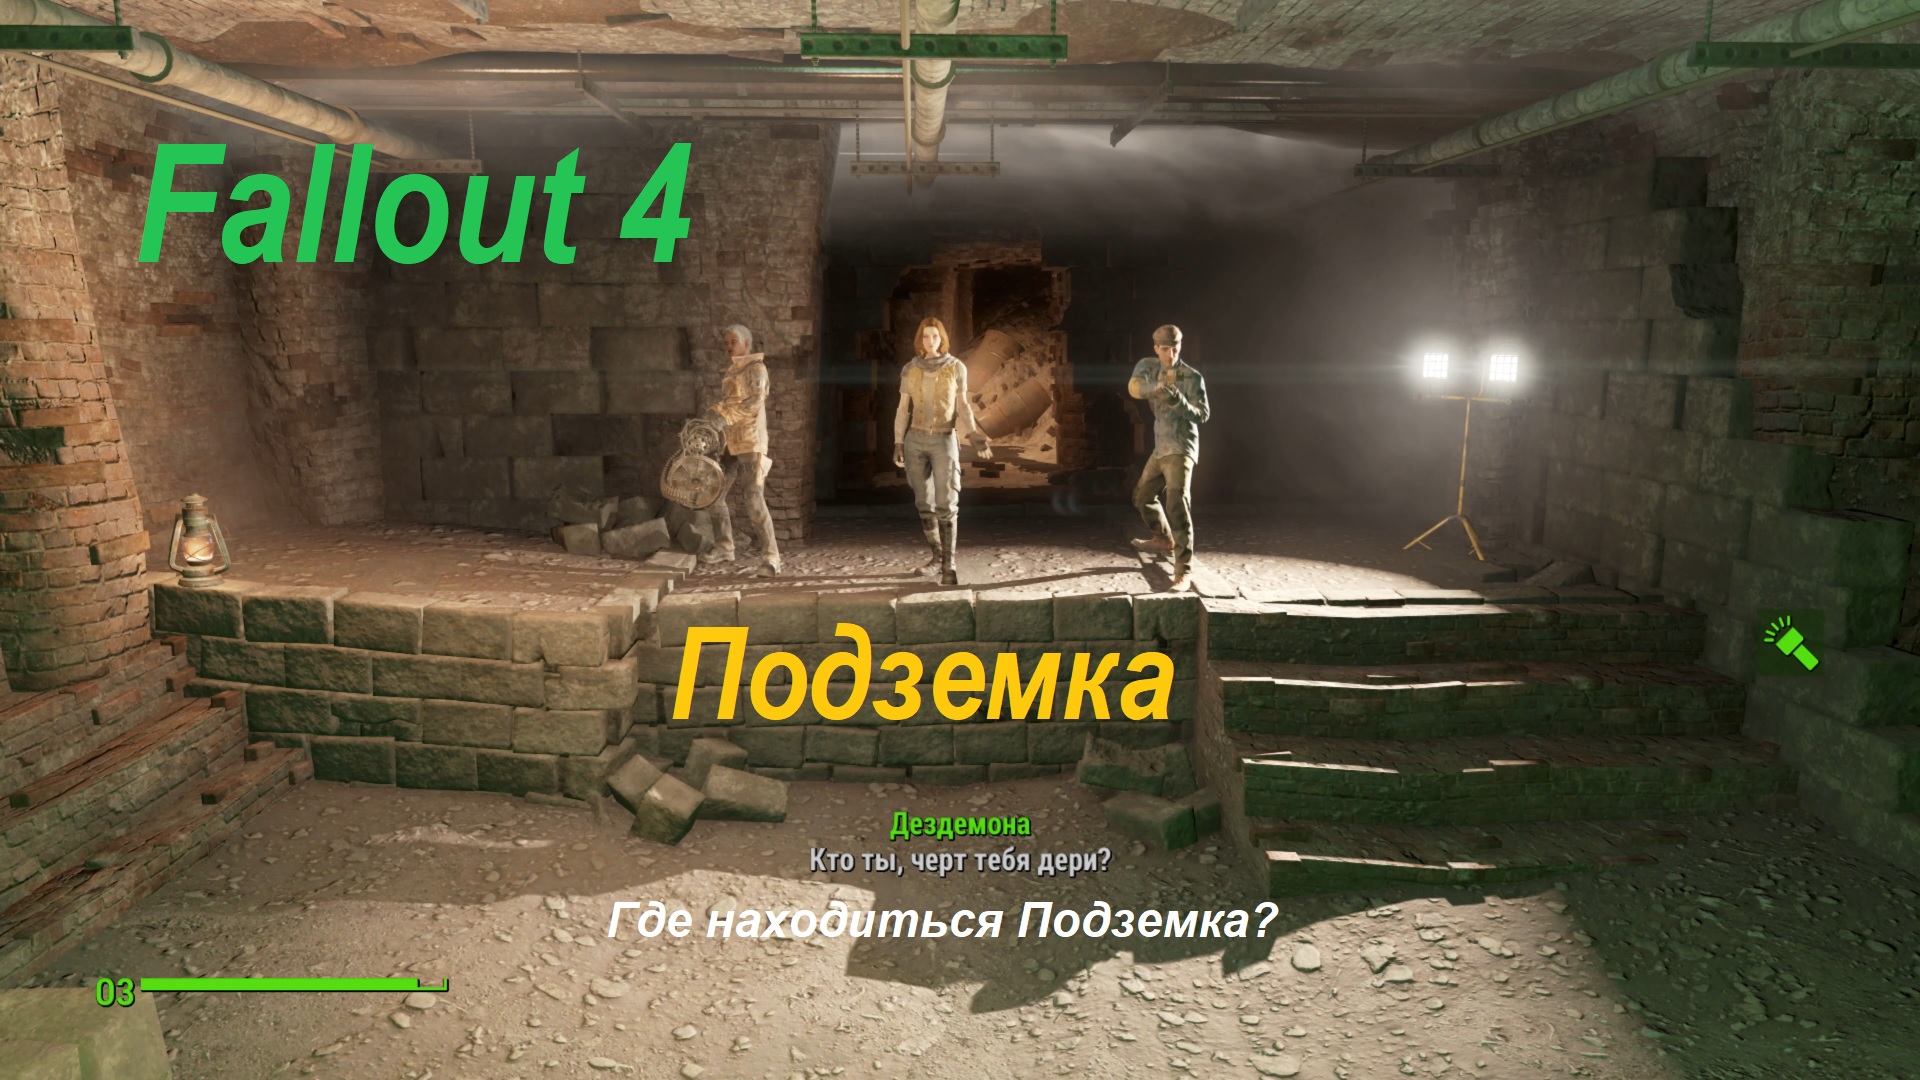 Fallout 4 - Подземка или где найти её в Содружестве